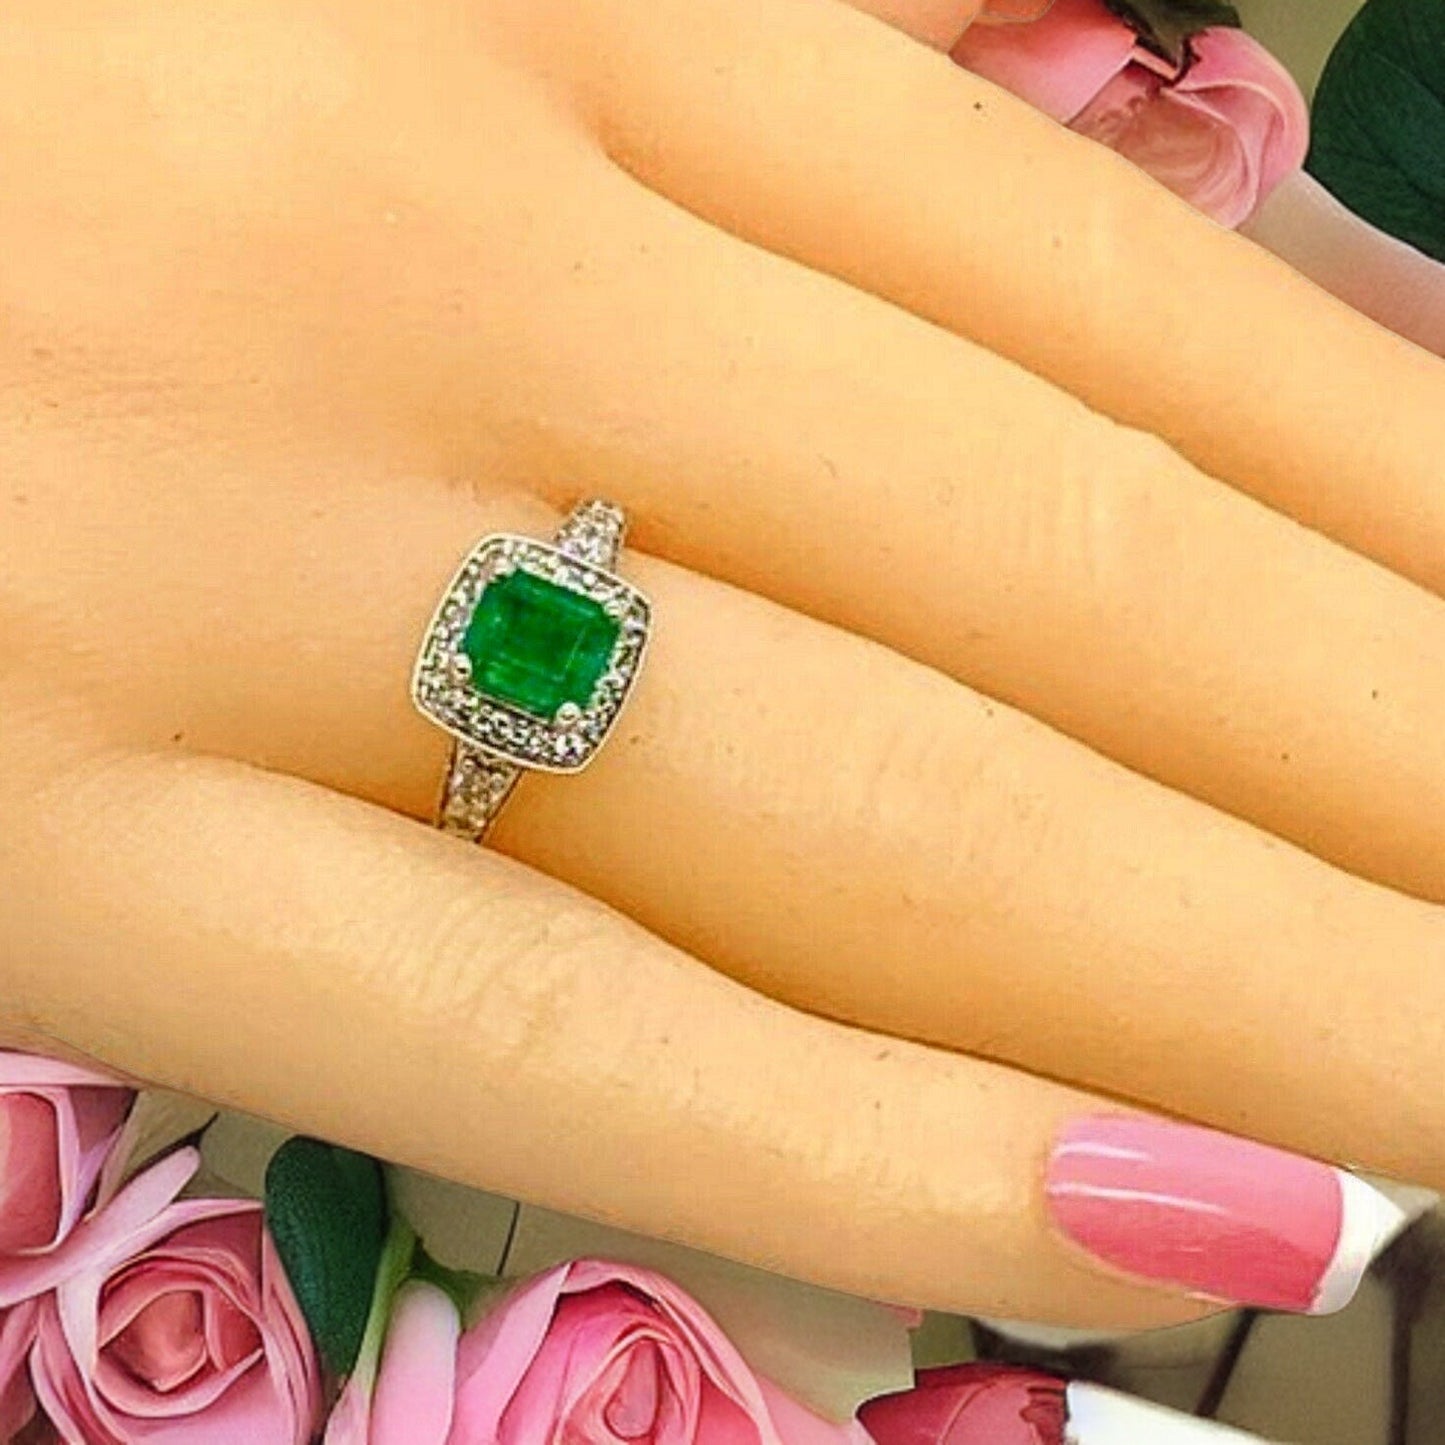 Diamond Emerald Ring 14k Gold 1.40 TCW Certified $4,950 920938